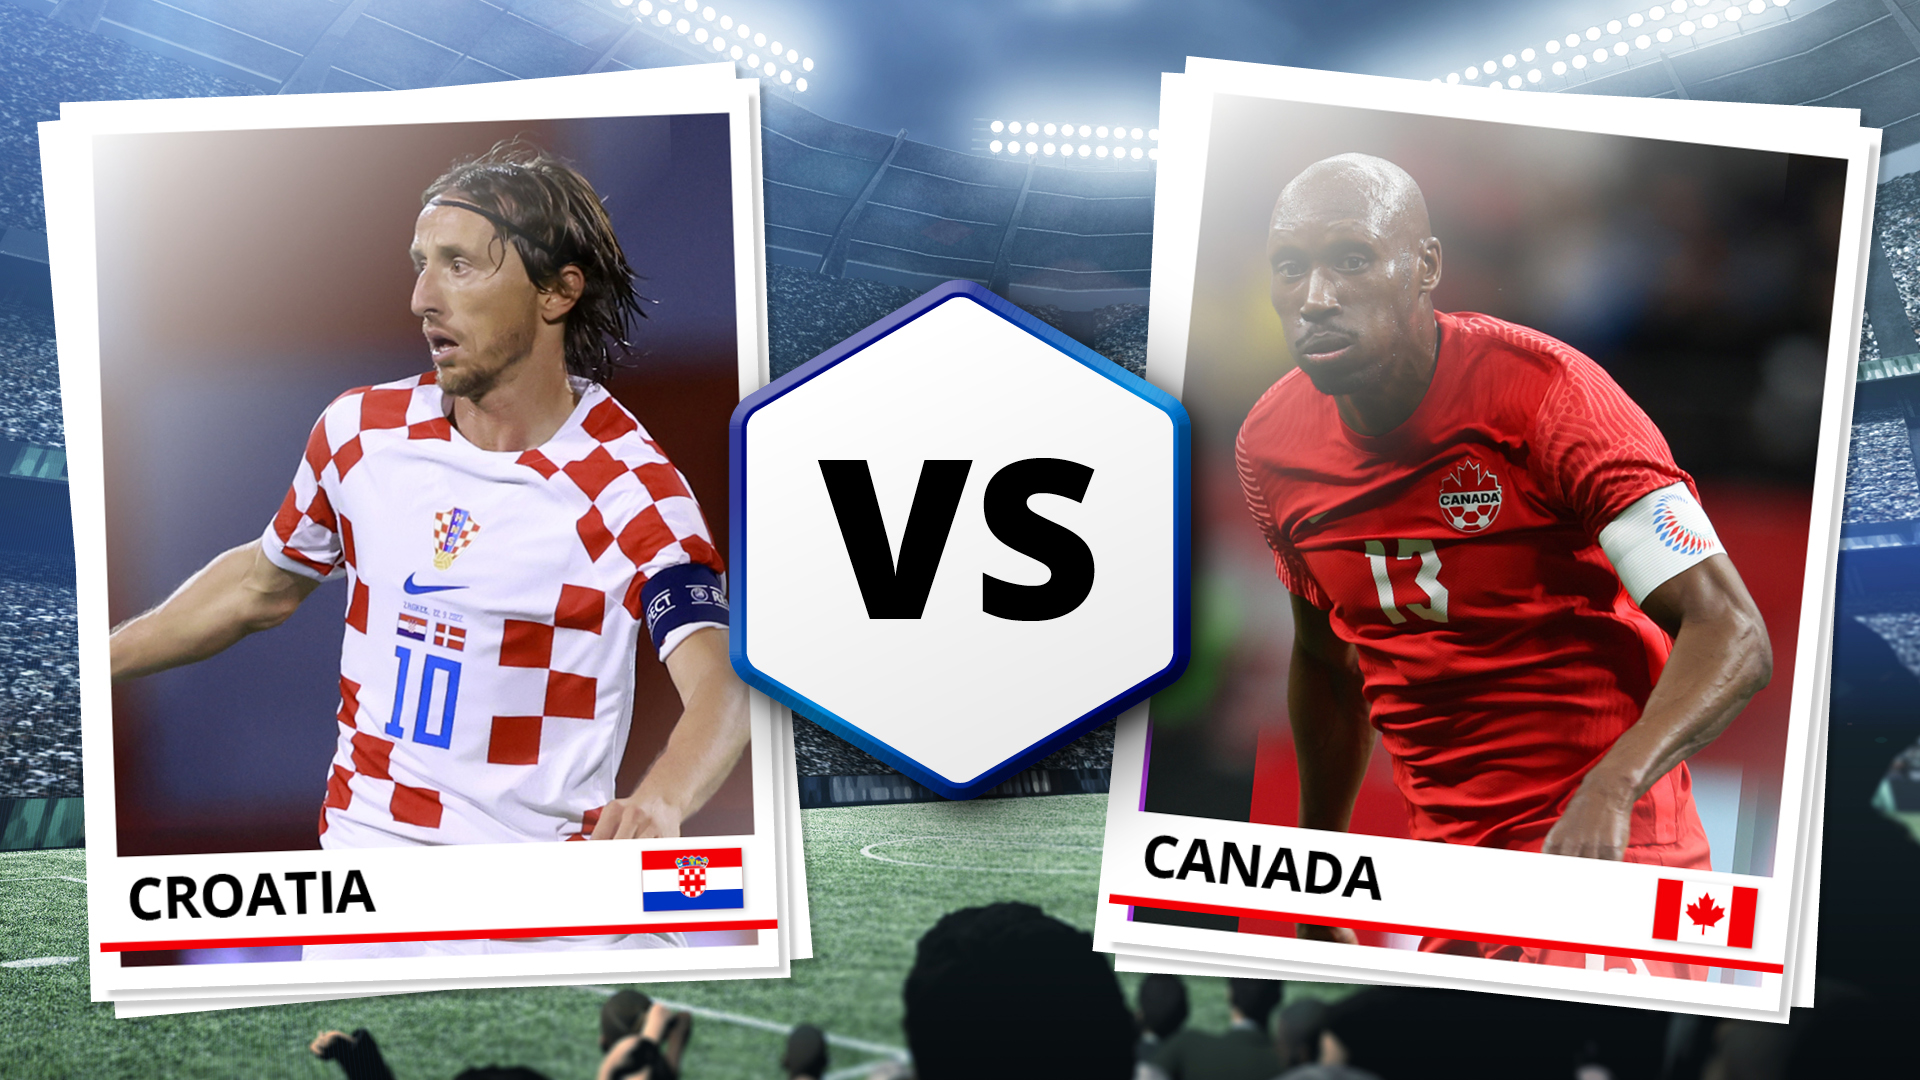 Croatia vs Canada live Streaming